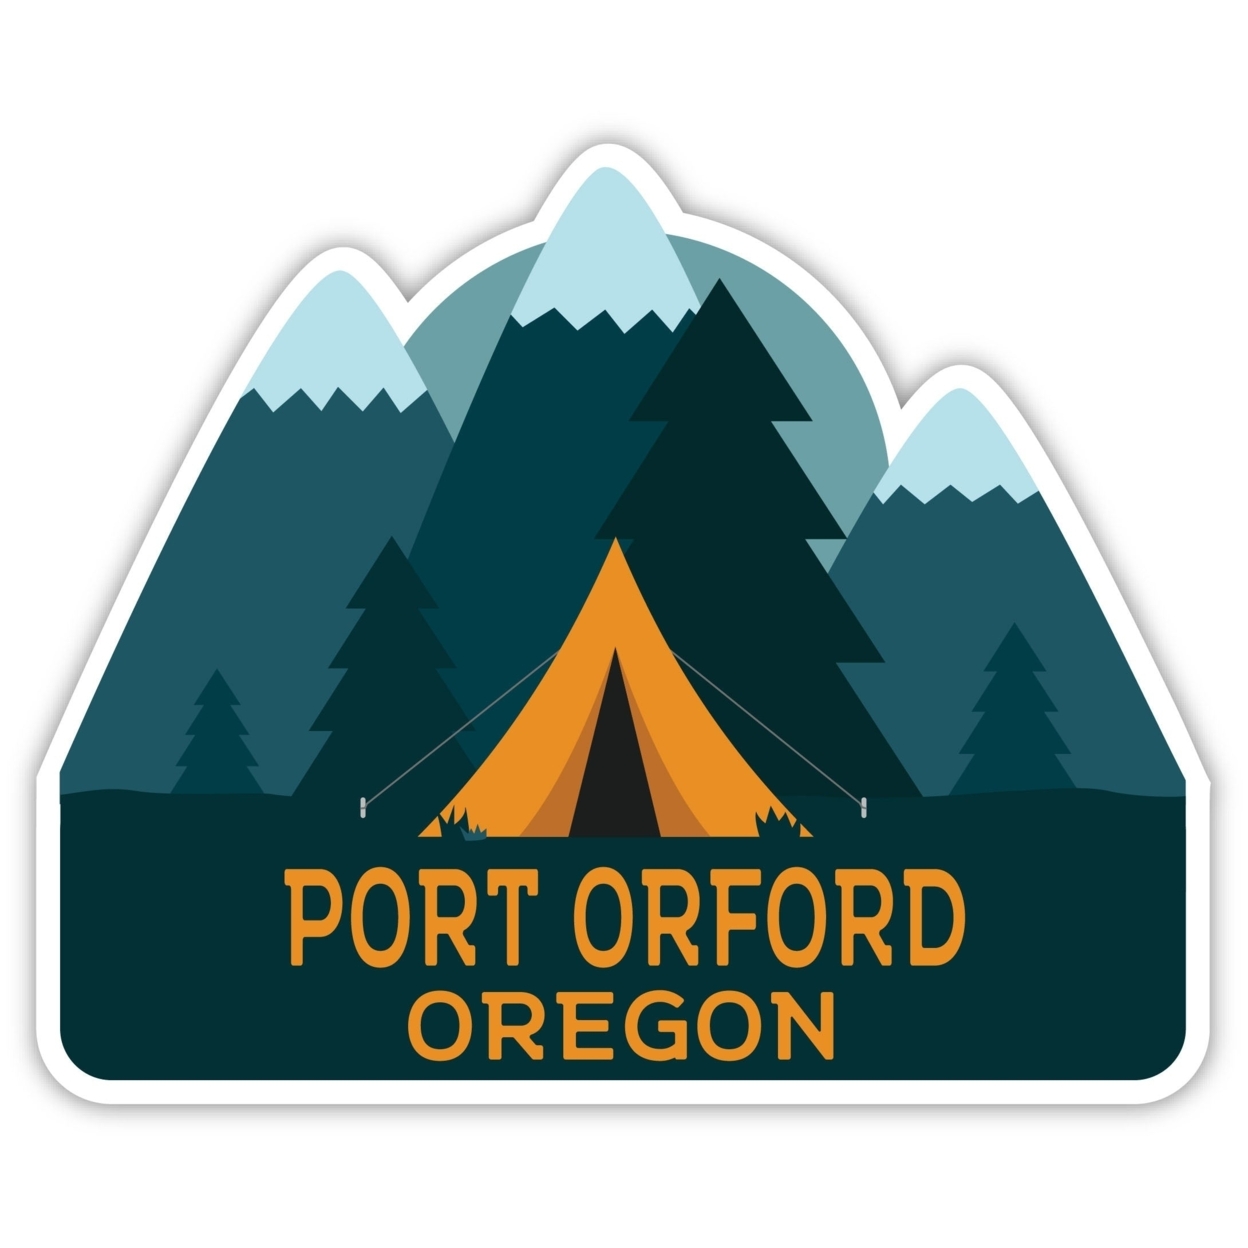 Port Orford Oregon Souvenir Decorative Stickers (Choose Theme And Size) - Single Unit, 4-Inch, Tent